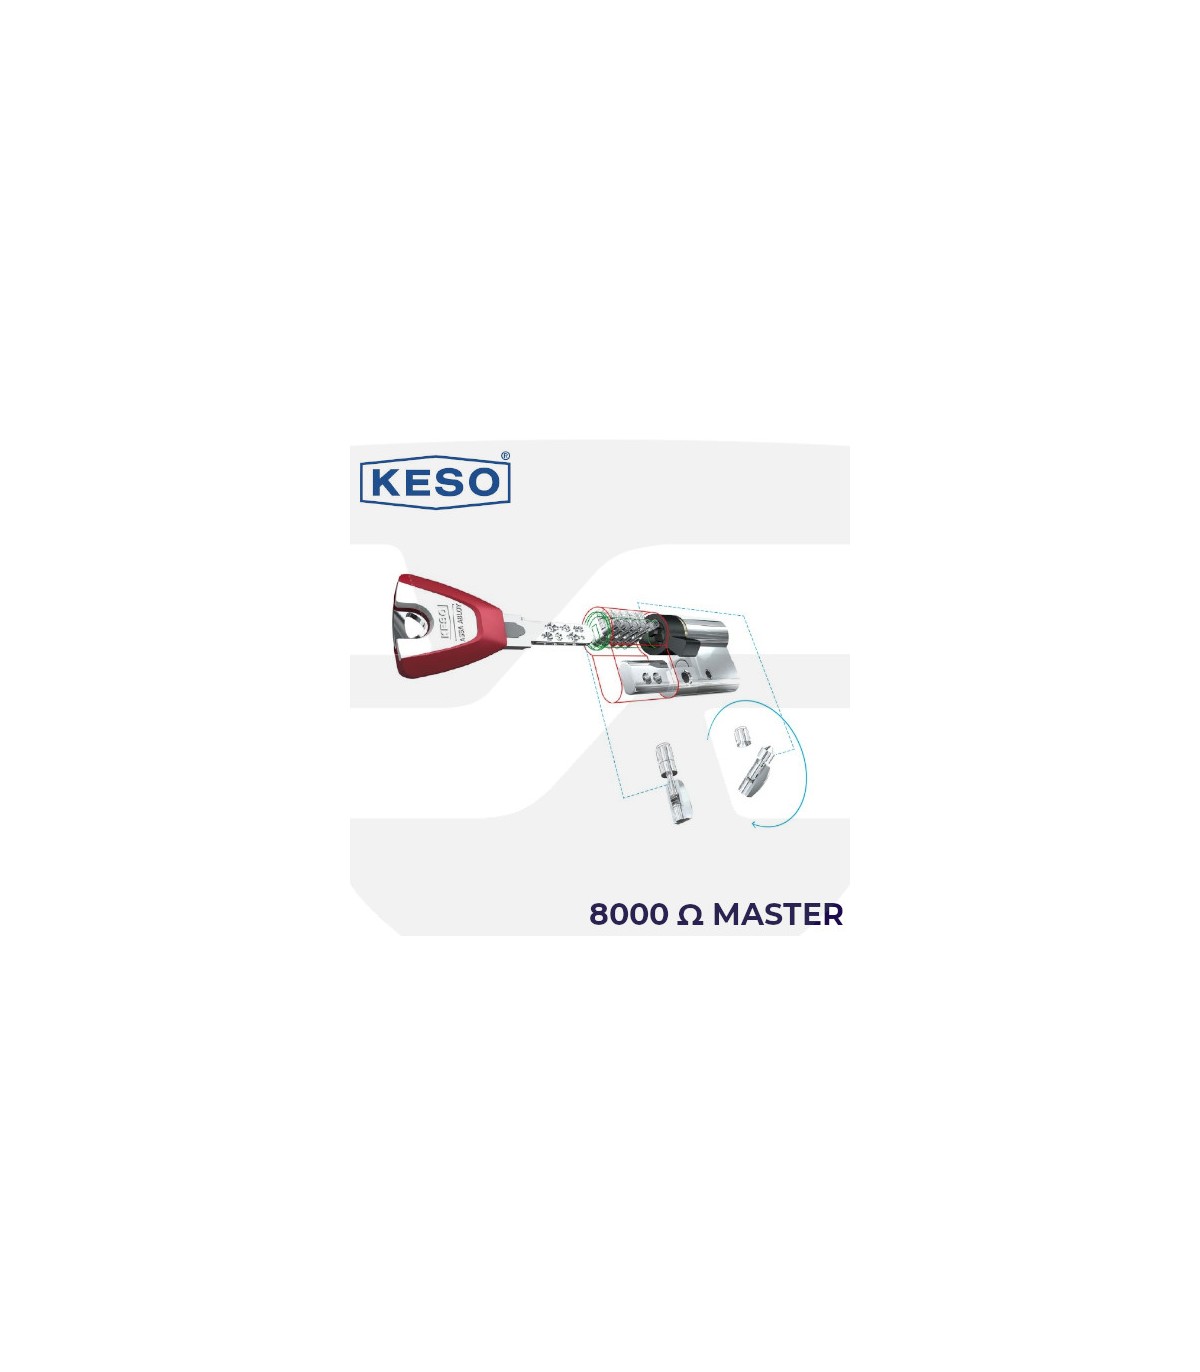 Cilindro Keso 8000Ω2 Master reforzado